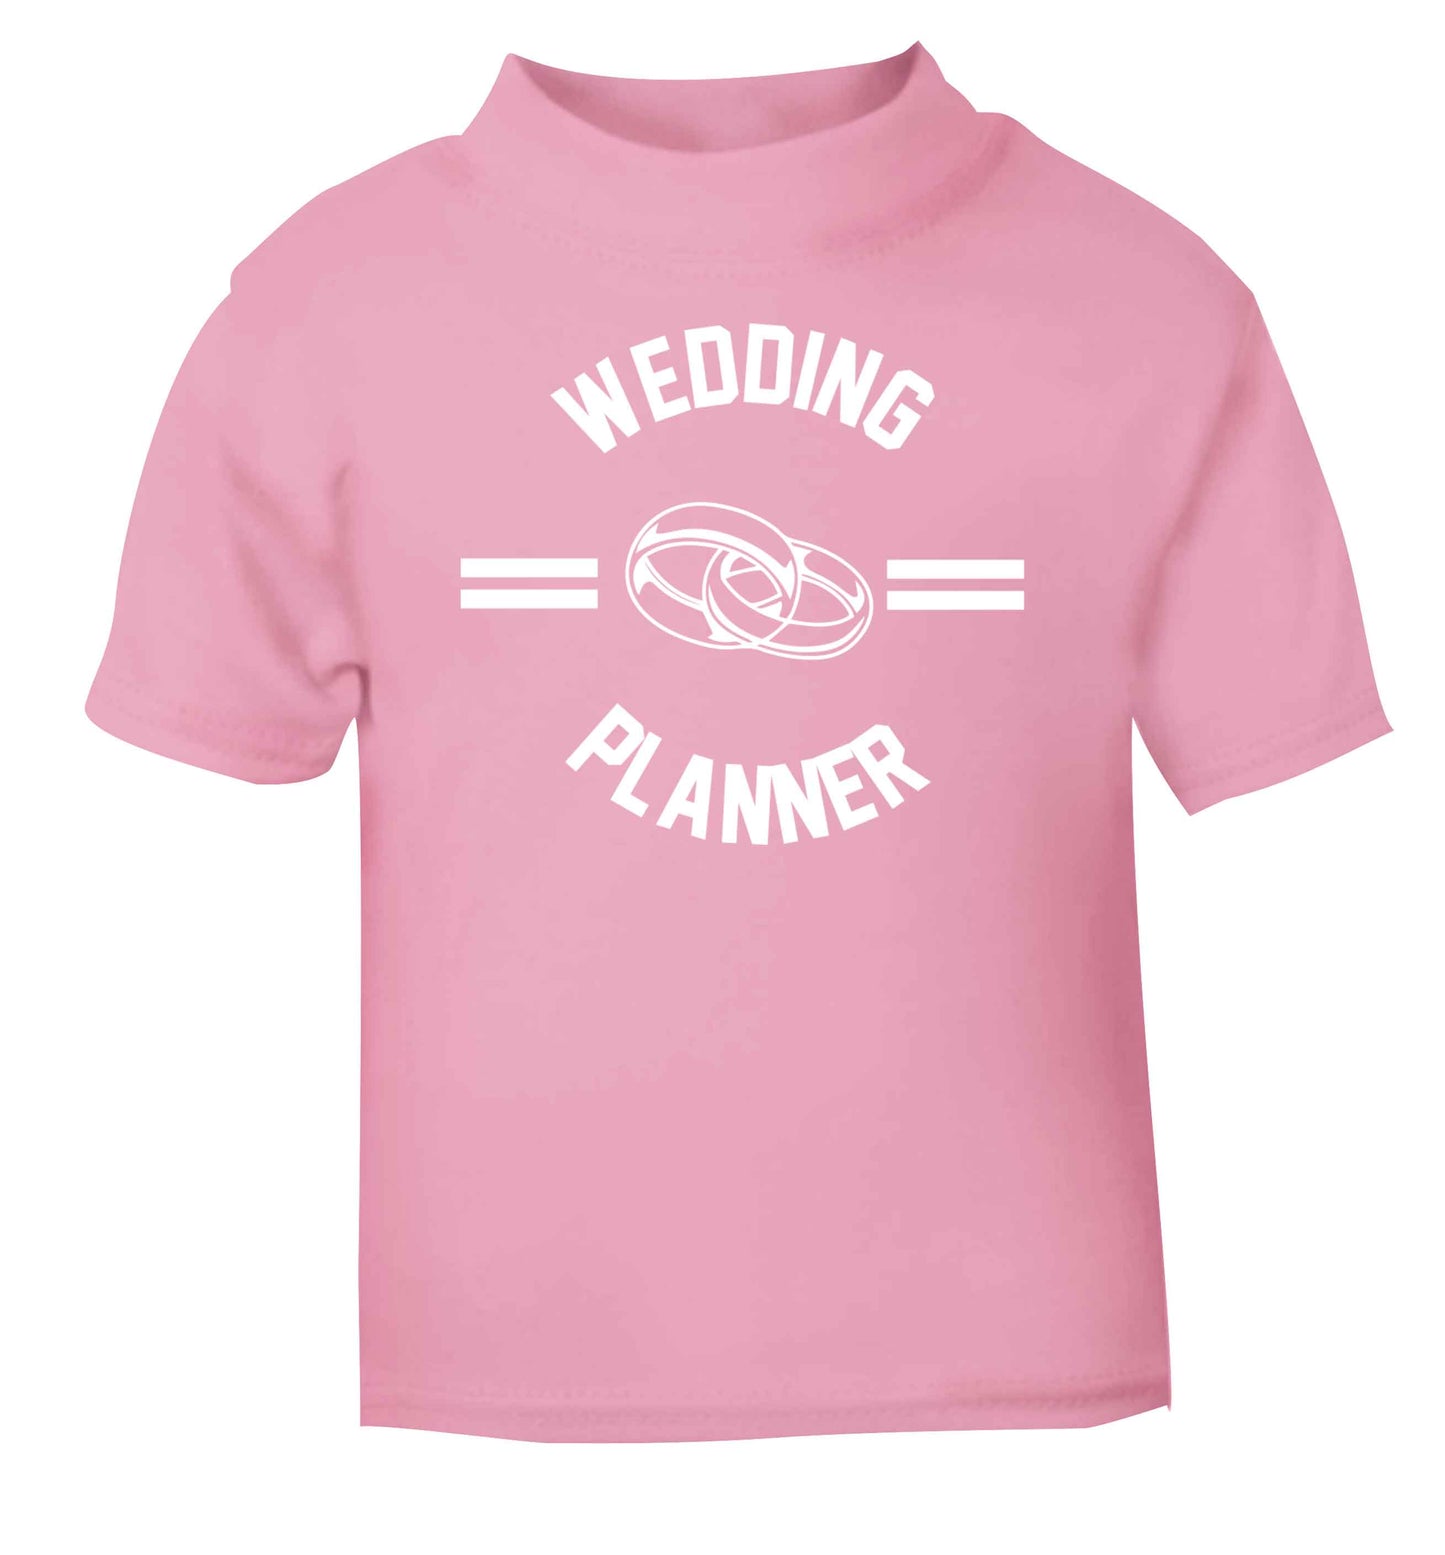 Wedding planner light pink baby toddler Tshirt 2 Years